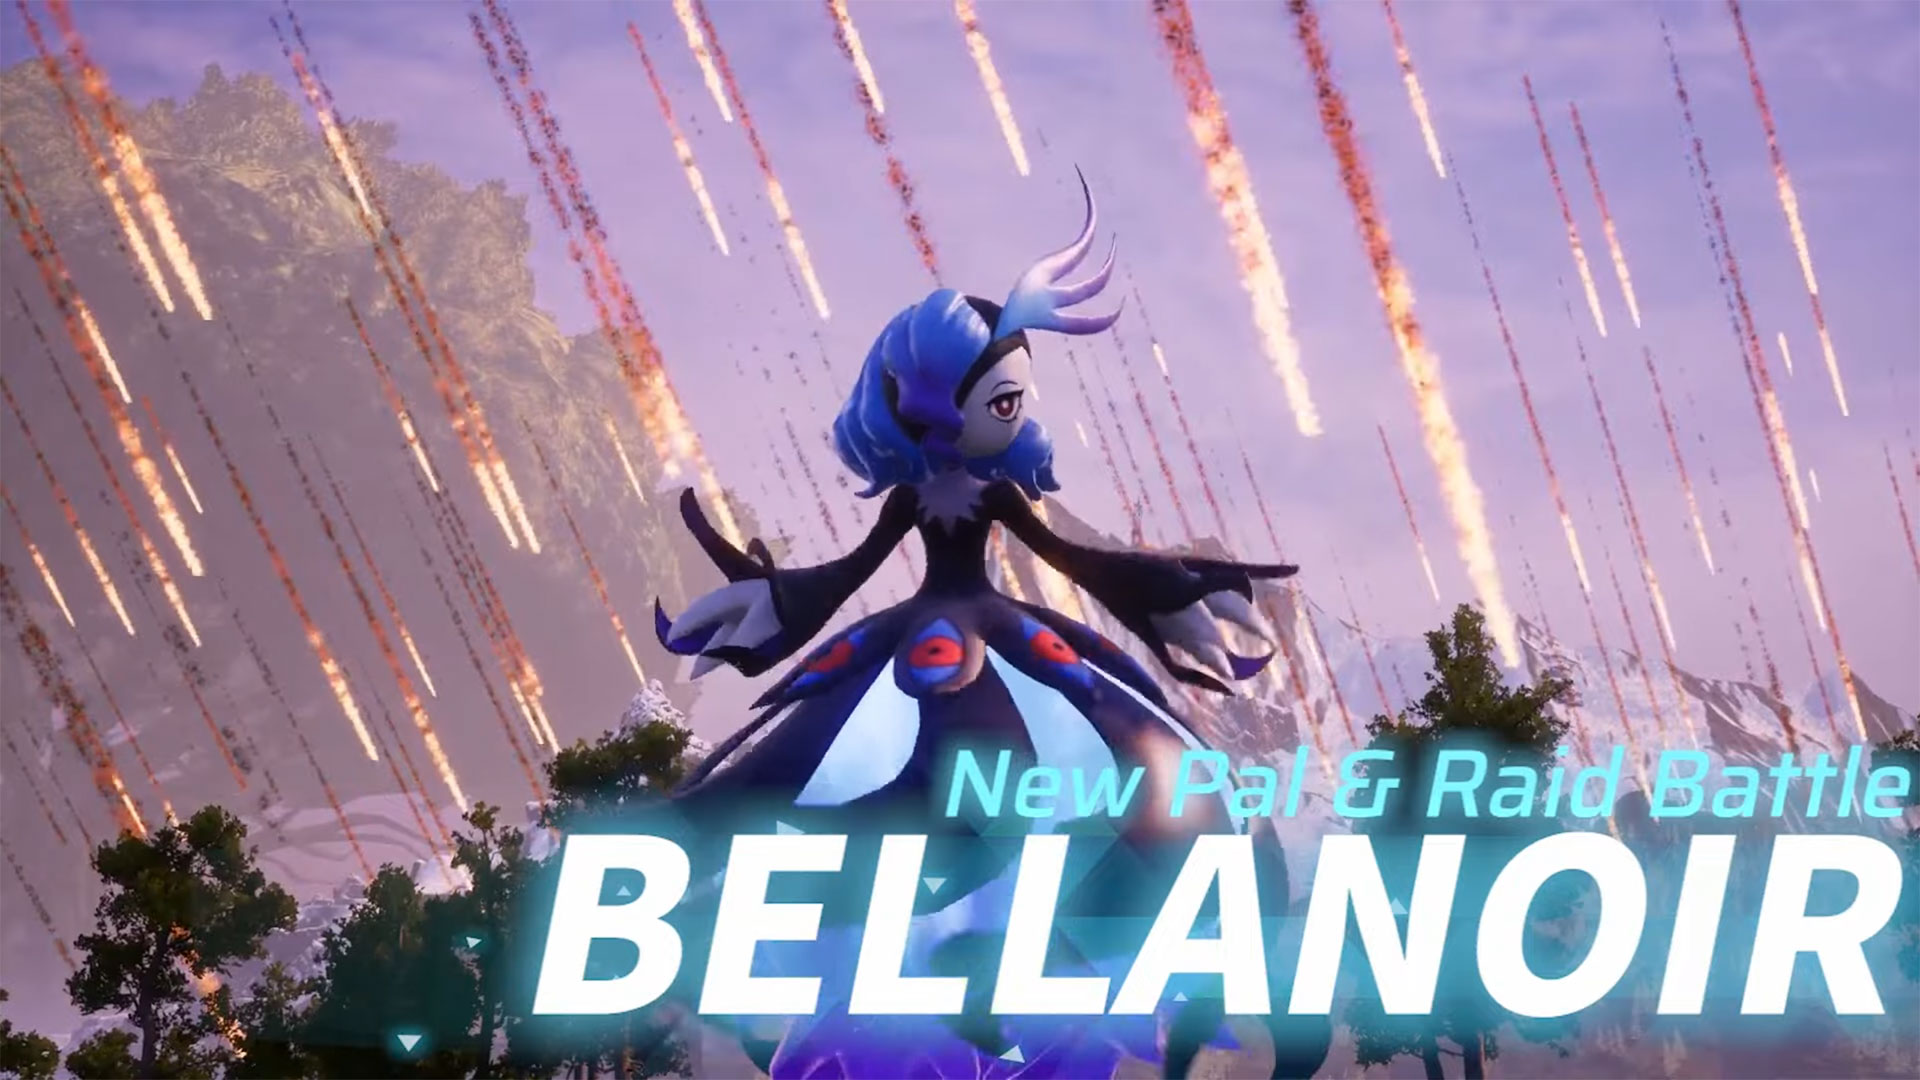 Palworld is teasing its first raid, Bellanoir